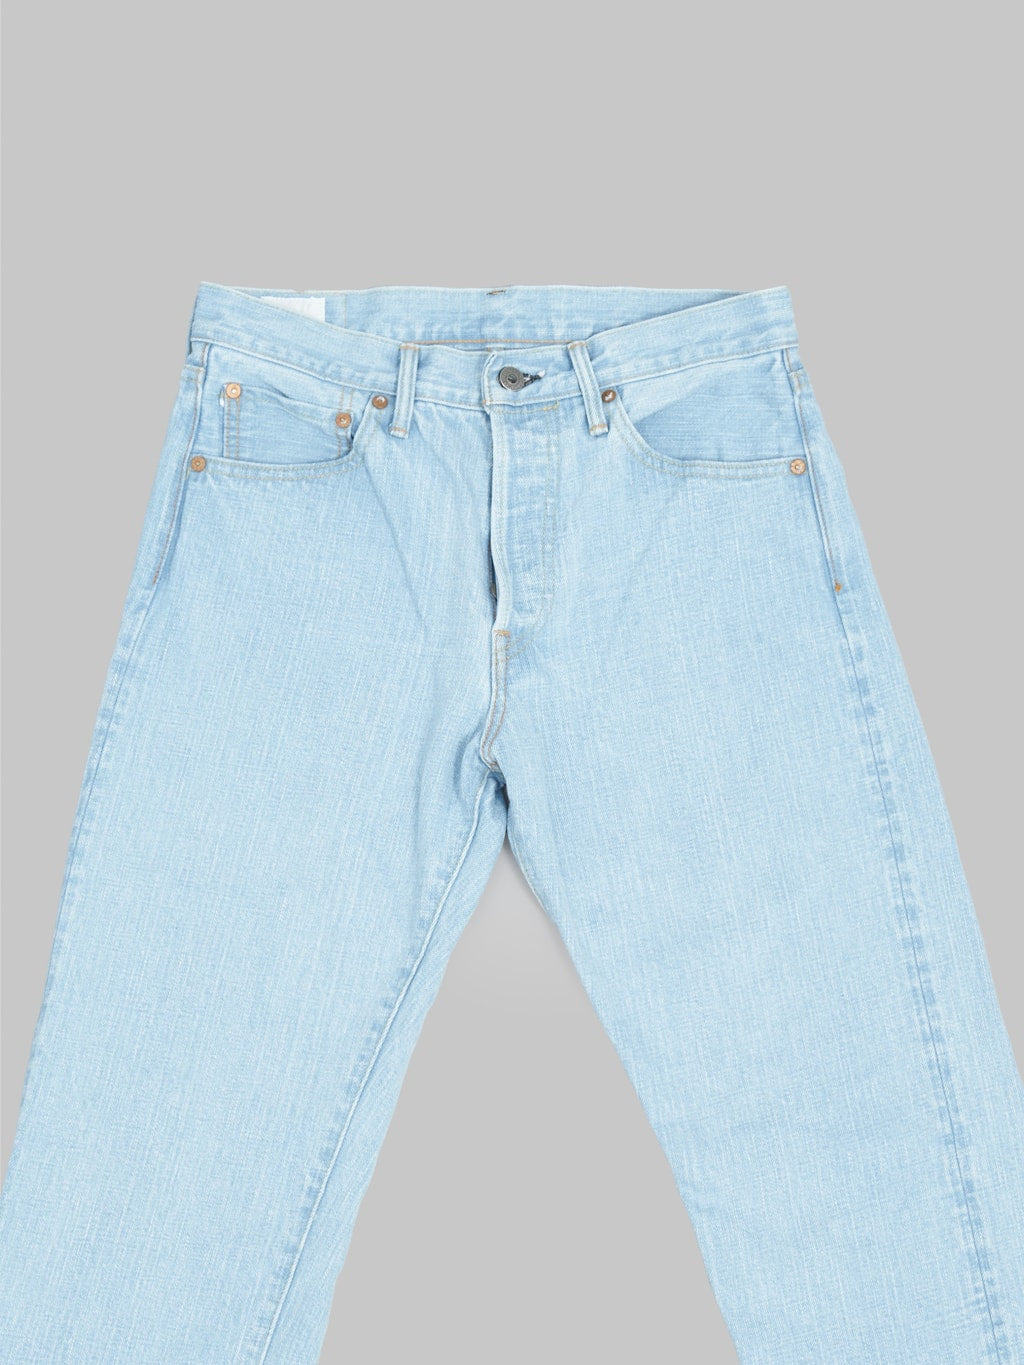 redcast heritage x oni denim kerama blue 15oz selvedge jeans front details